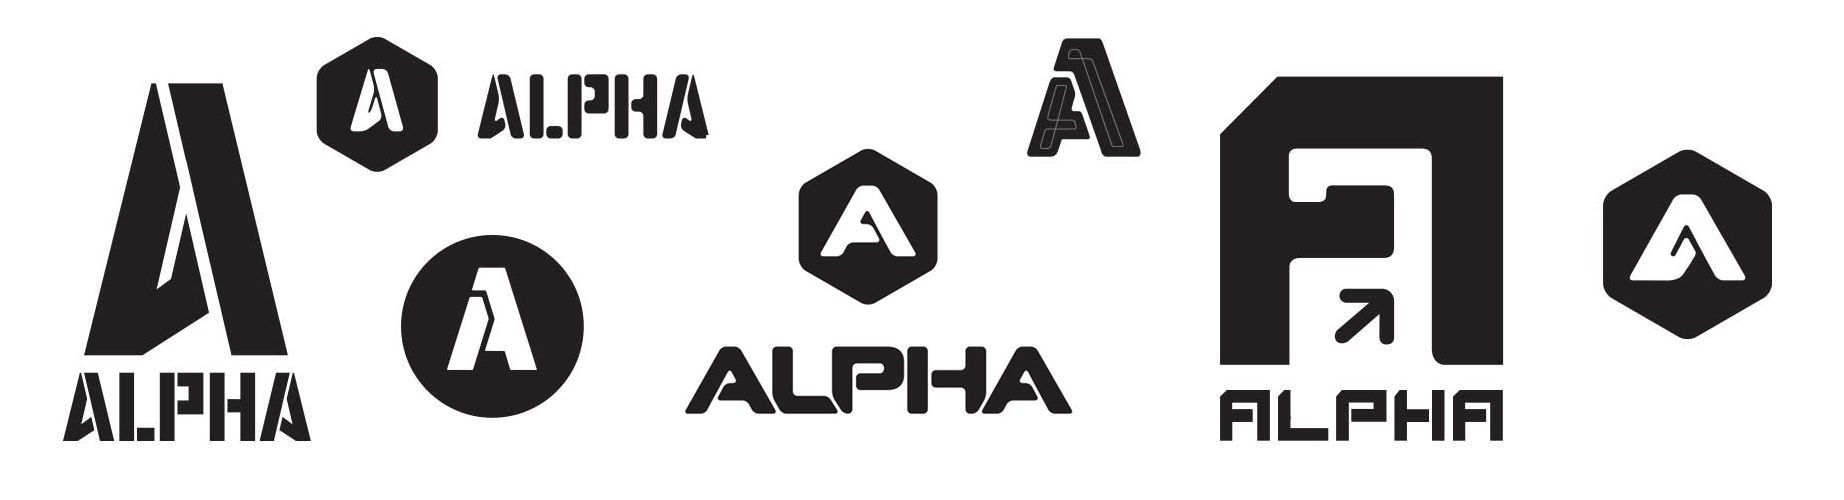 Alpha_LogoMarks_exploration_2